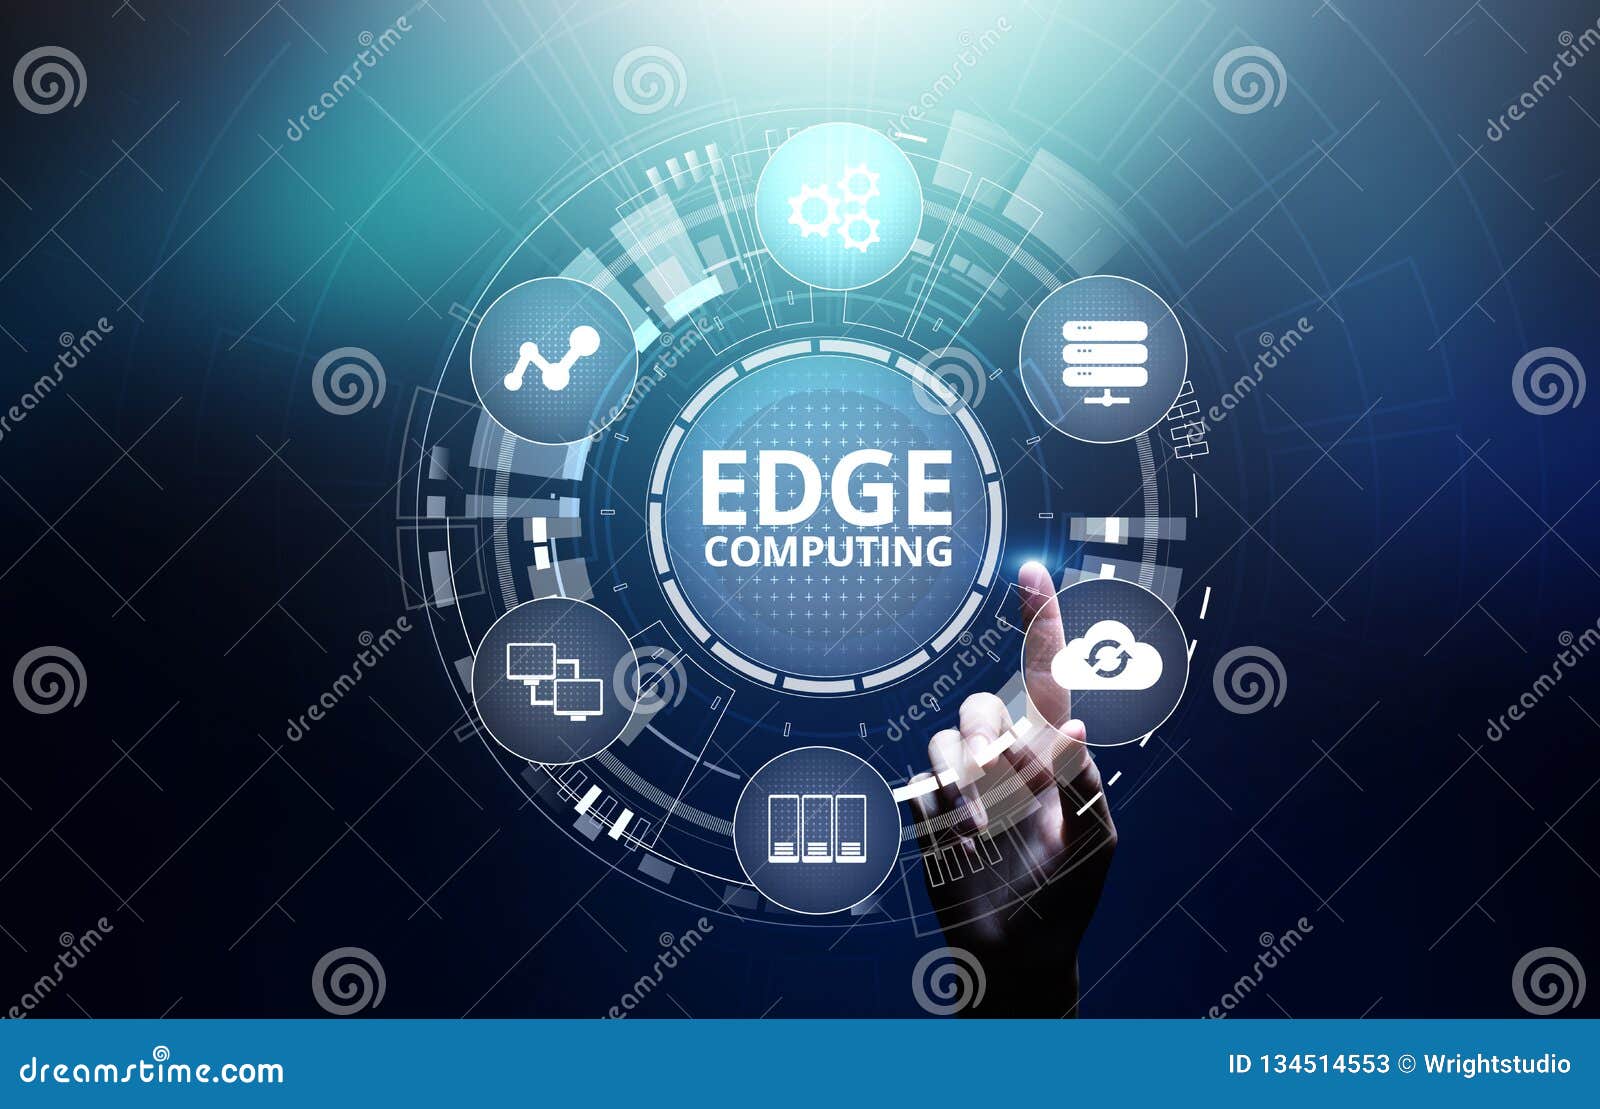 edge computing modern it technology on virtual screen concept